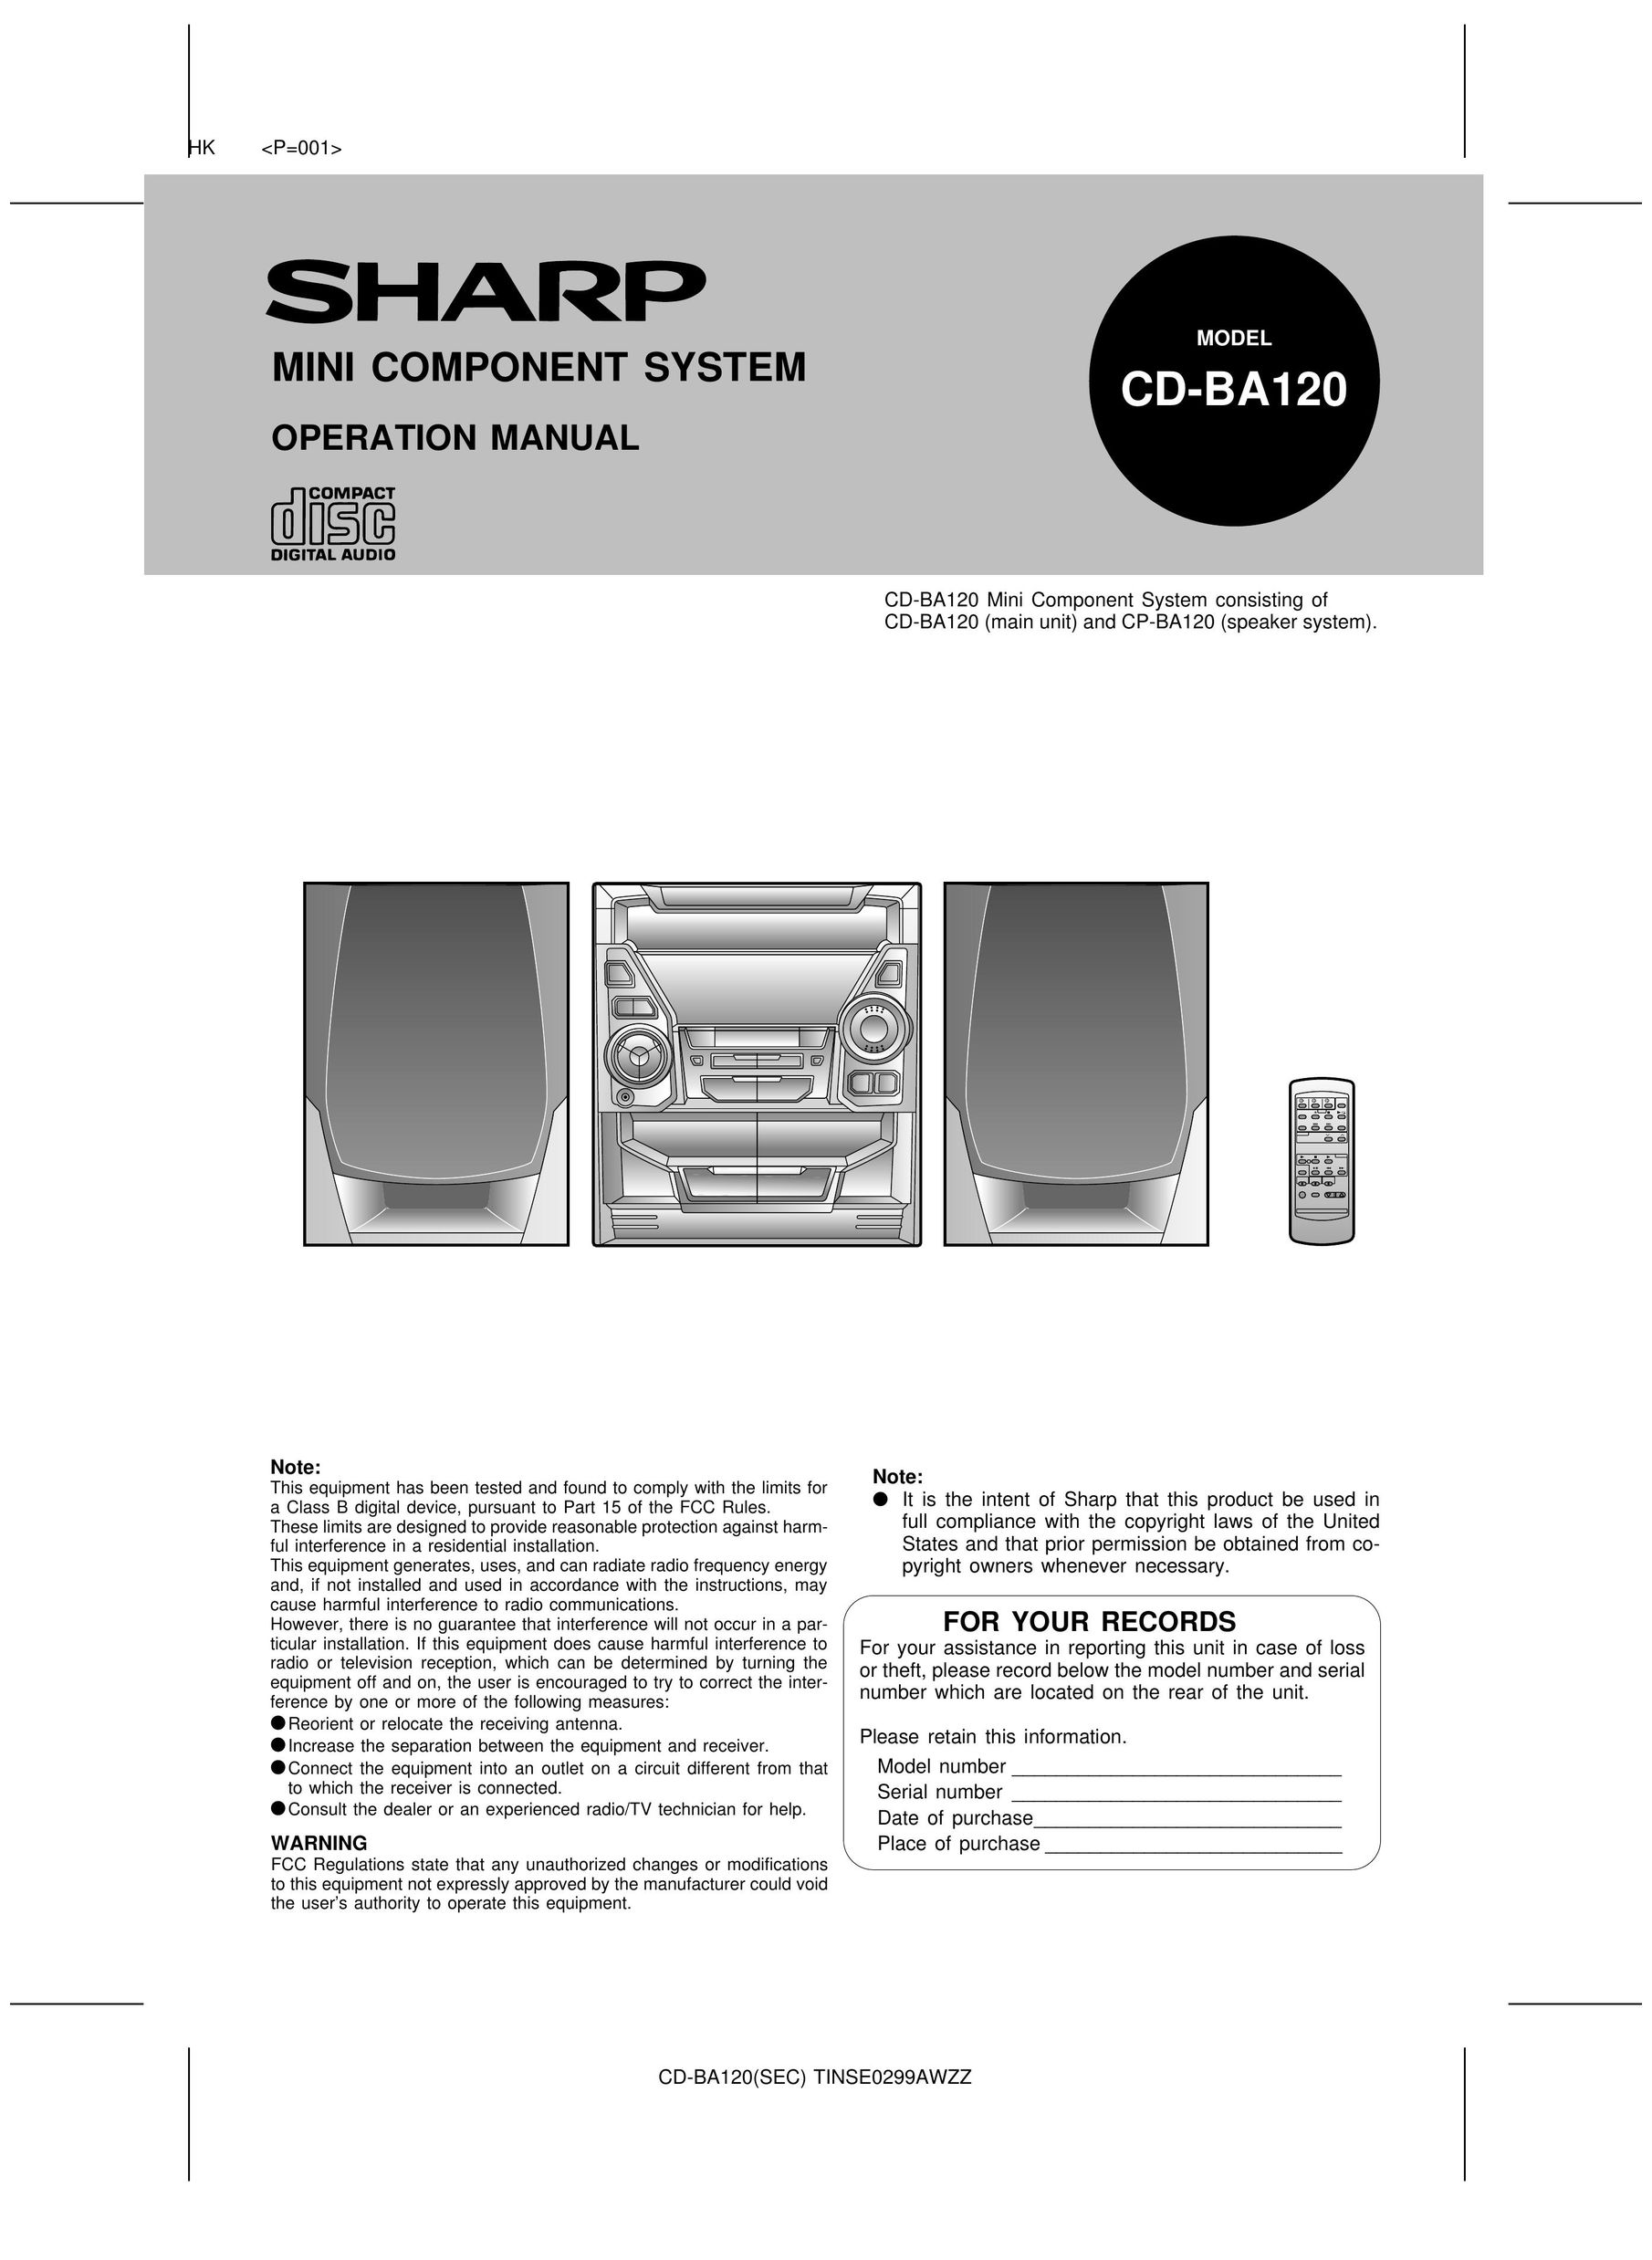 Sharp CD-BA120 Stereo System User Manual